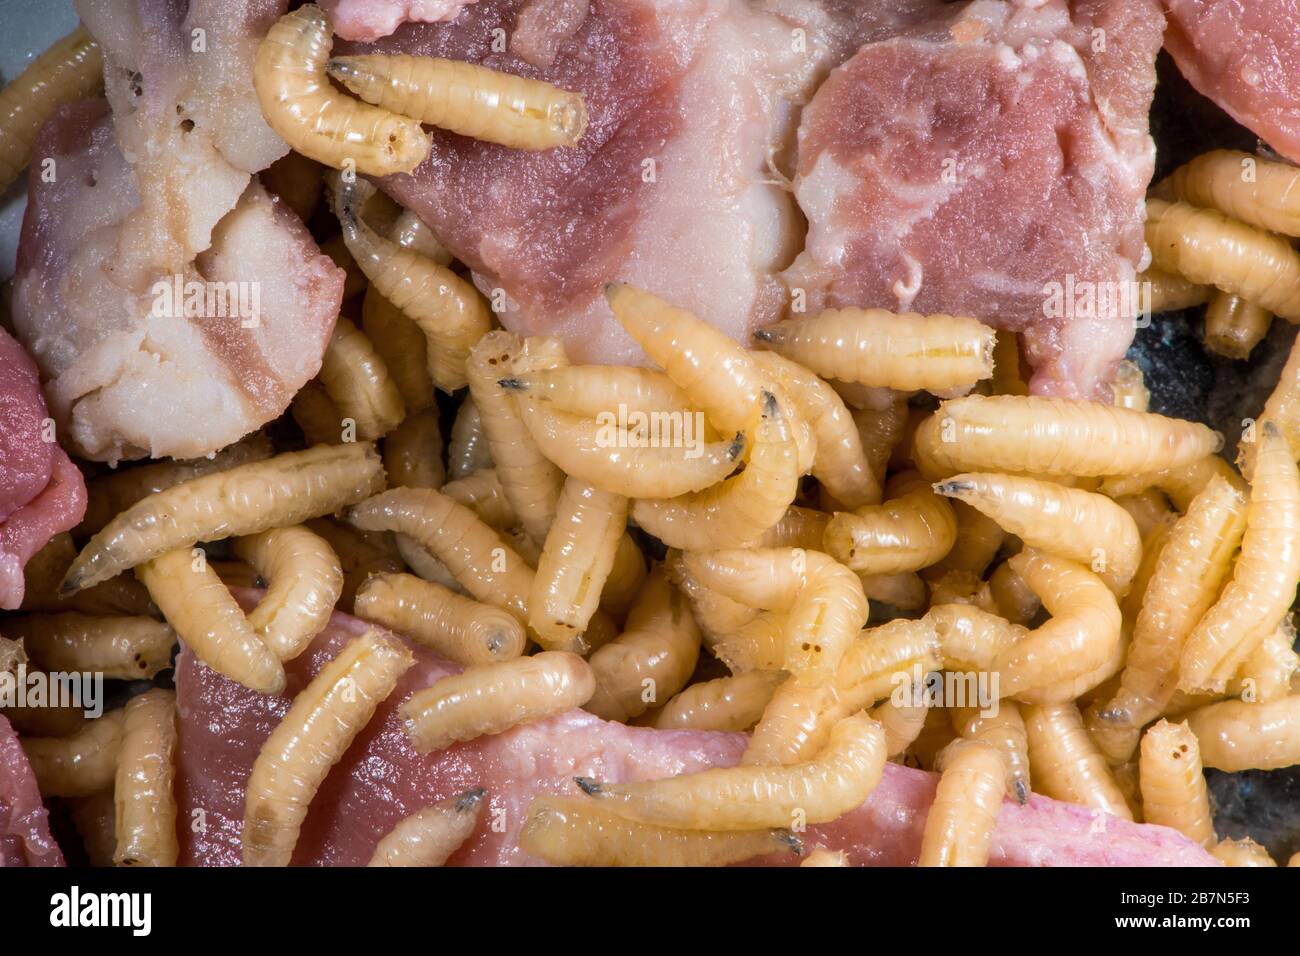 maggots in food